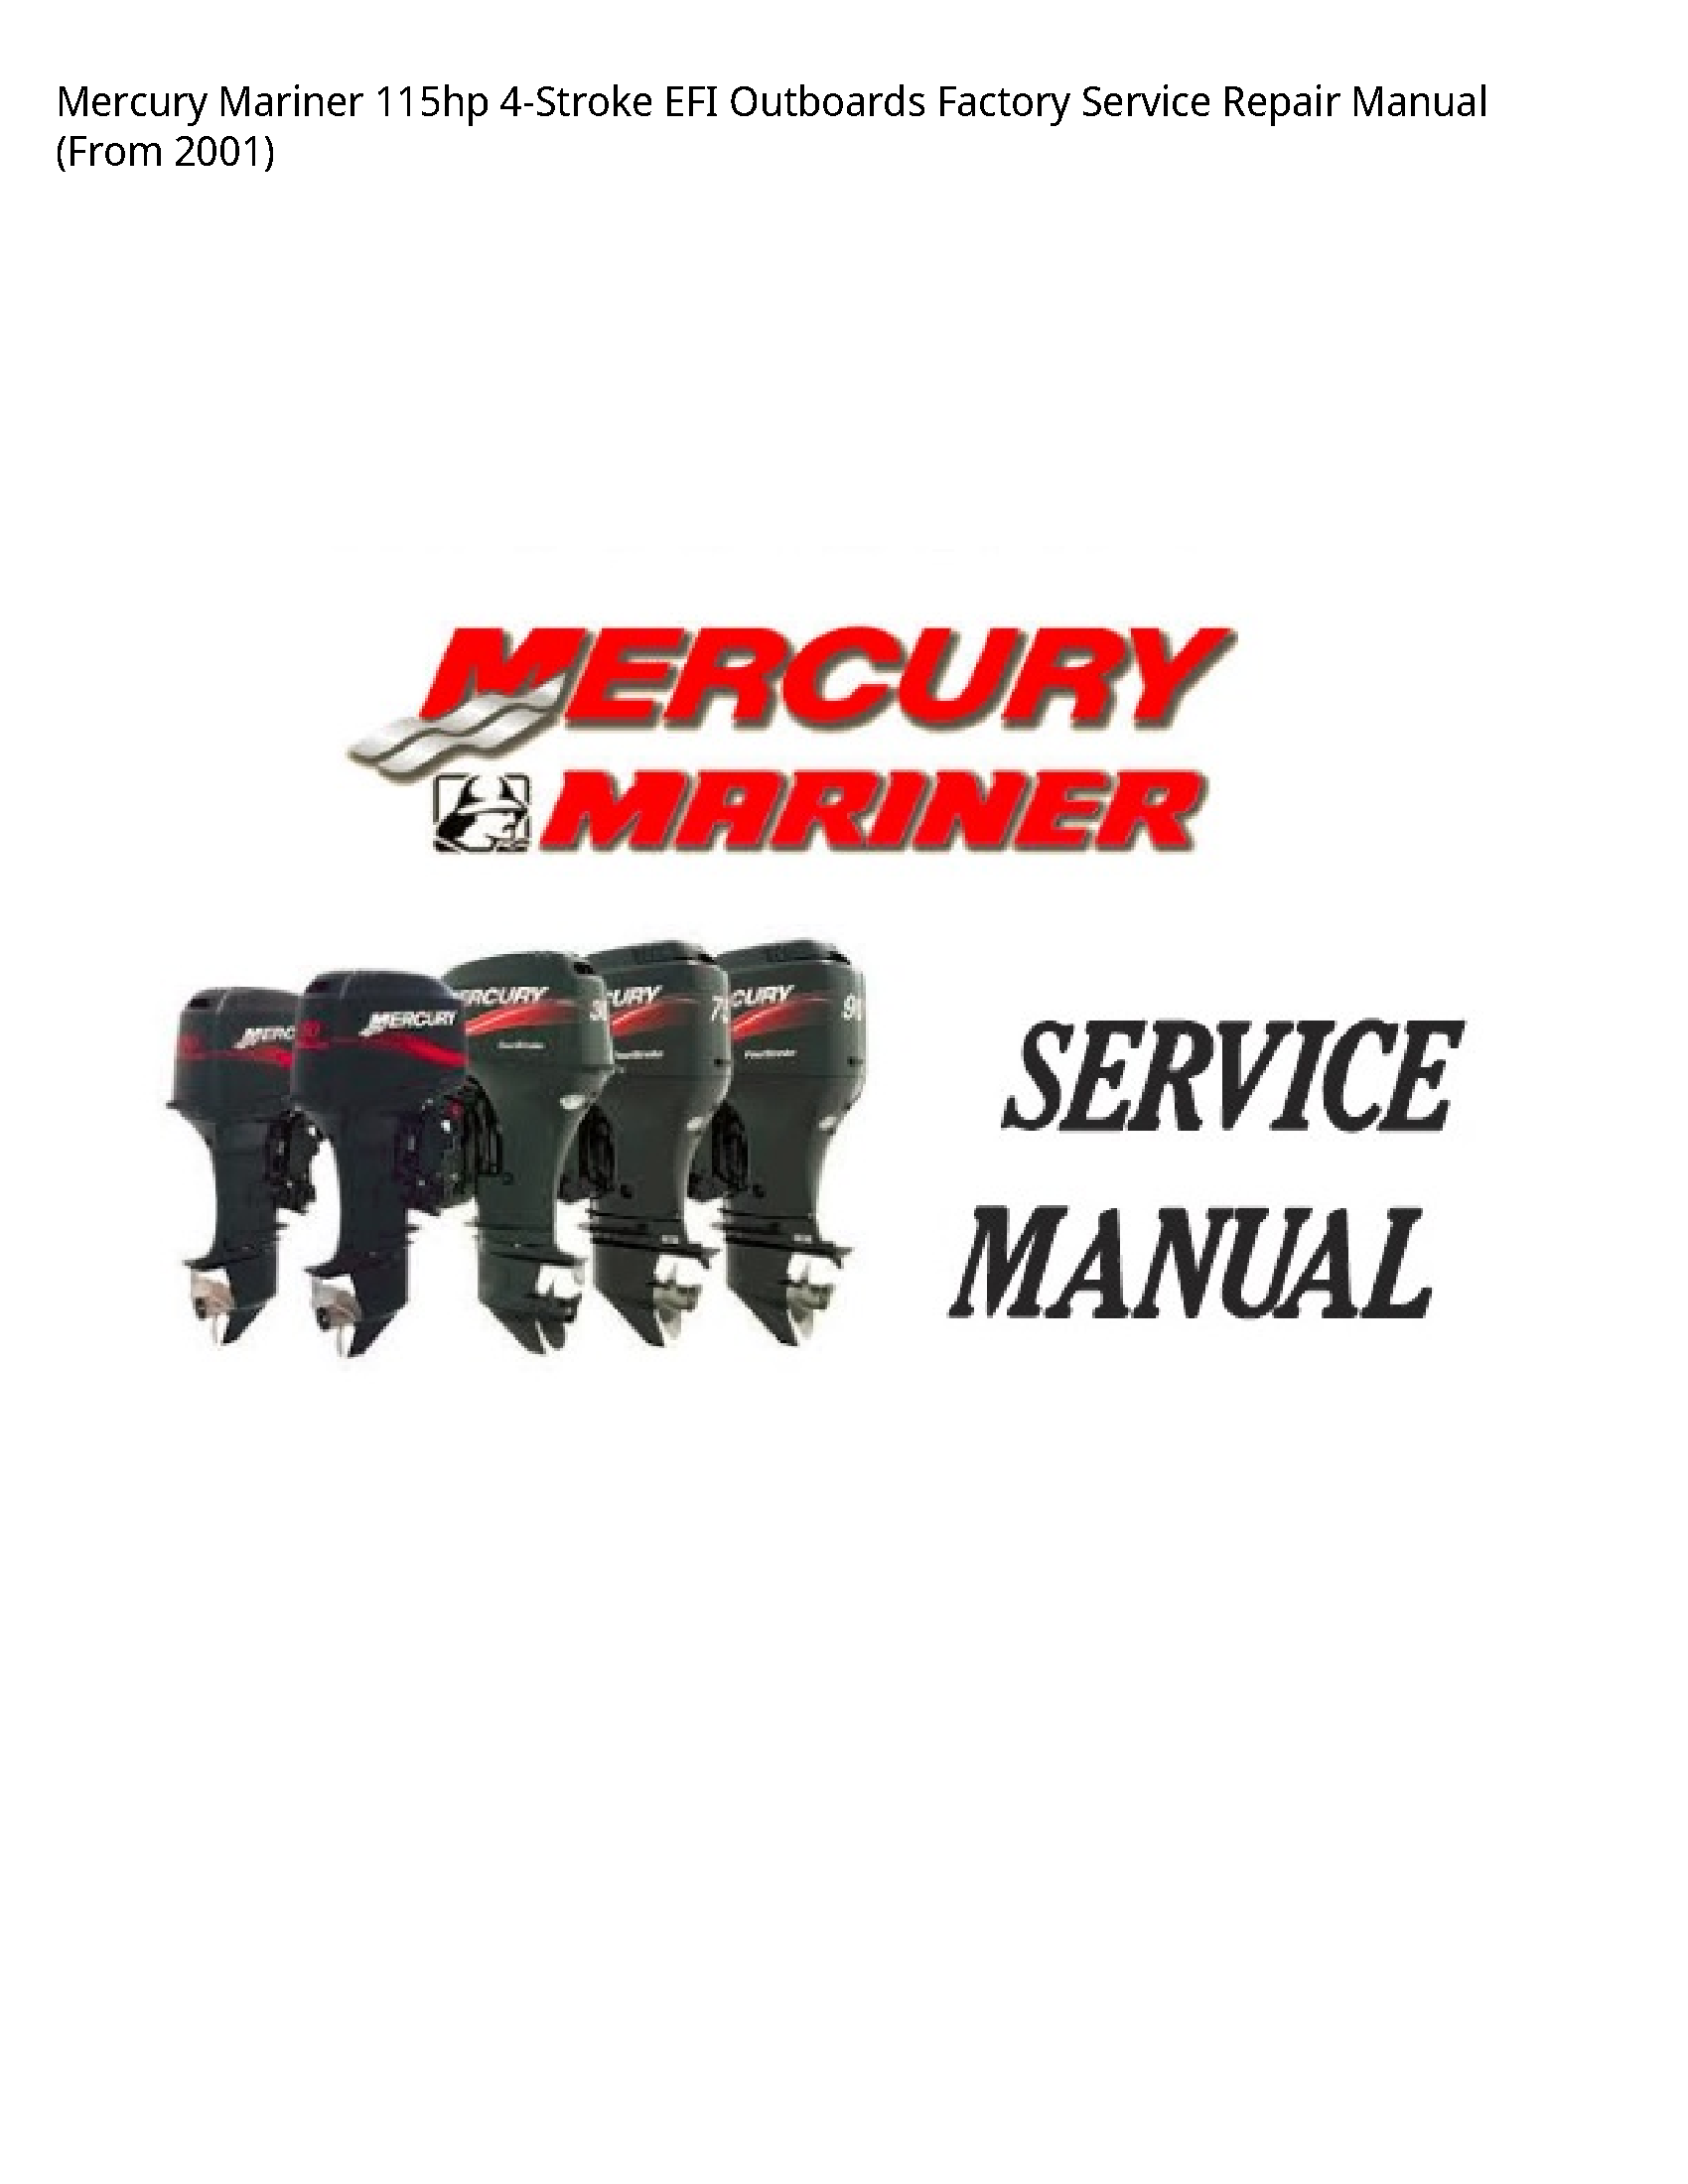 Mercury Mariner 115hp EFI Outboards Factory manual